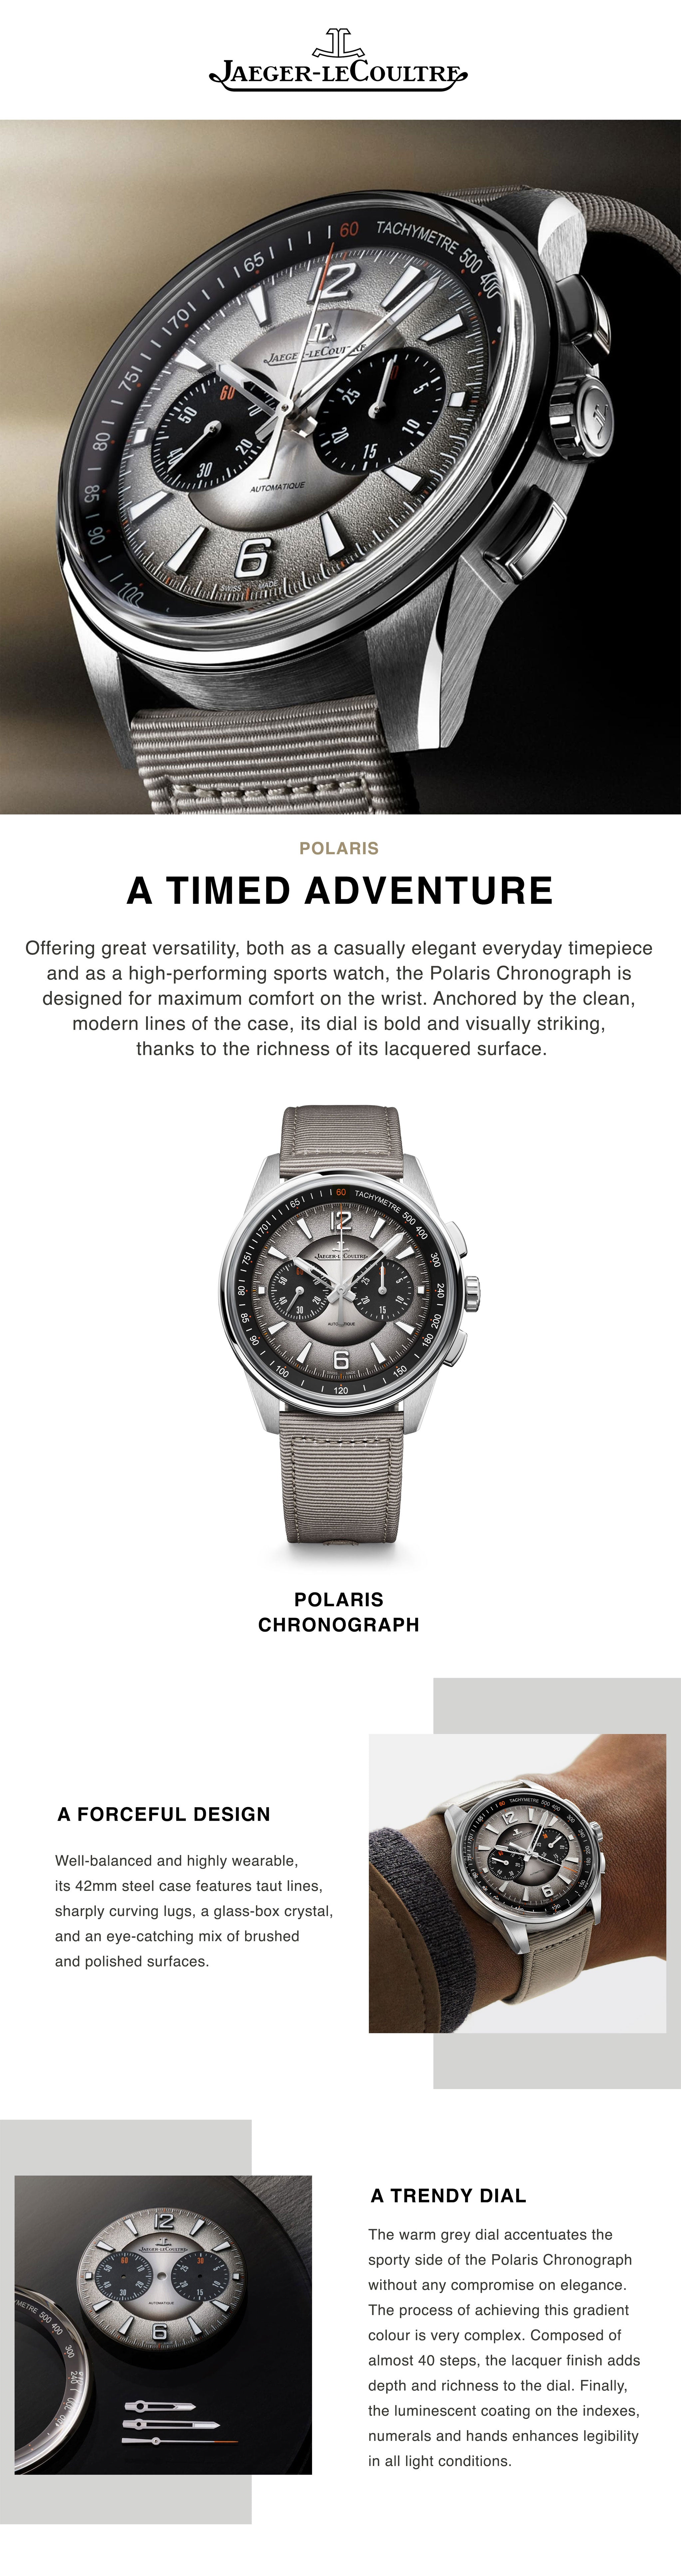 Jaeger-LeCoultre - A Sporty-Elegant Heritage - polaris chronograph